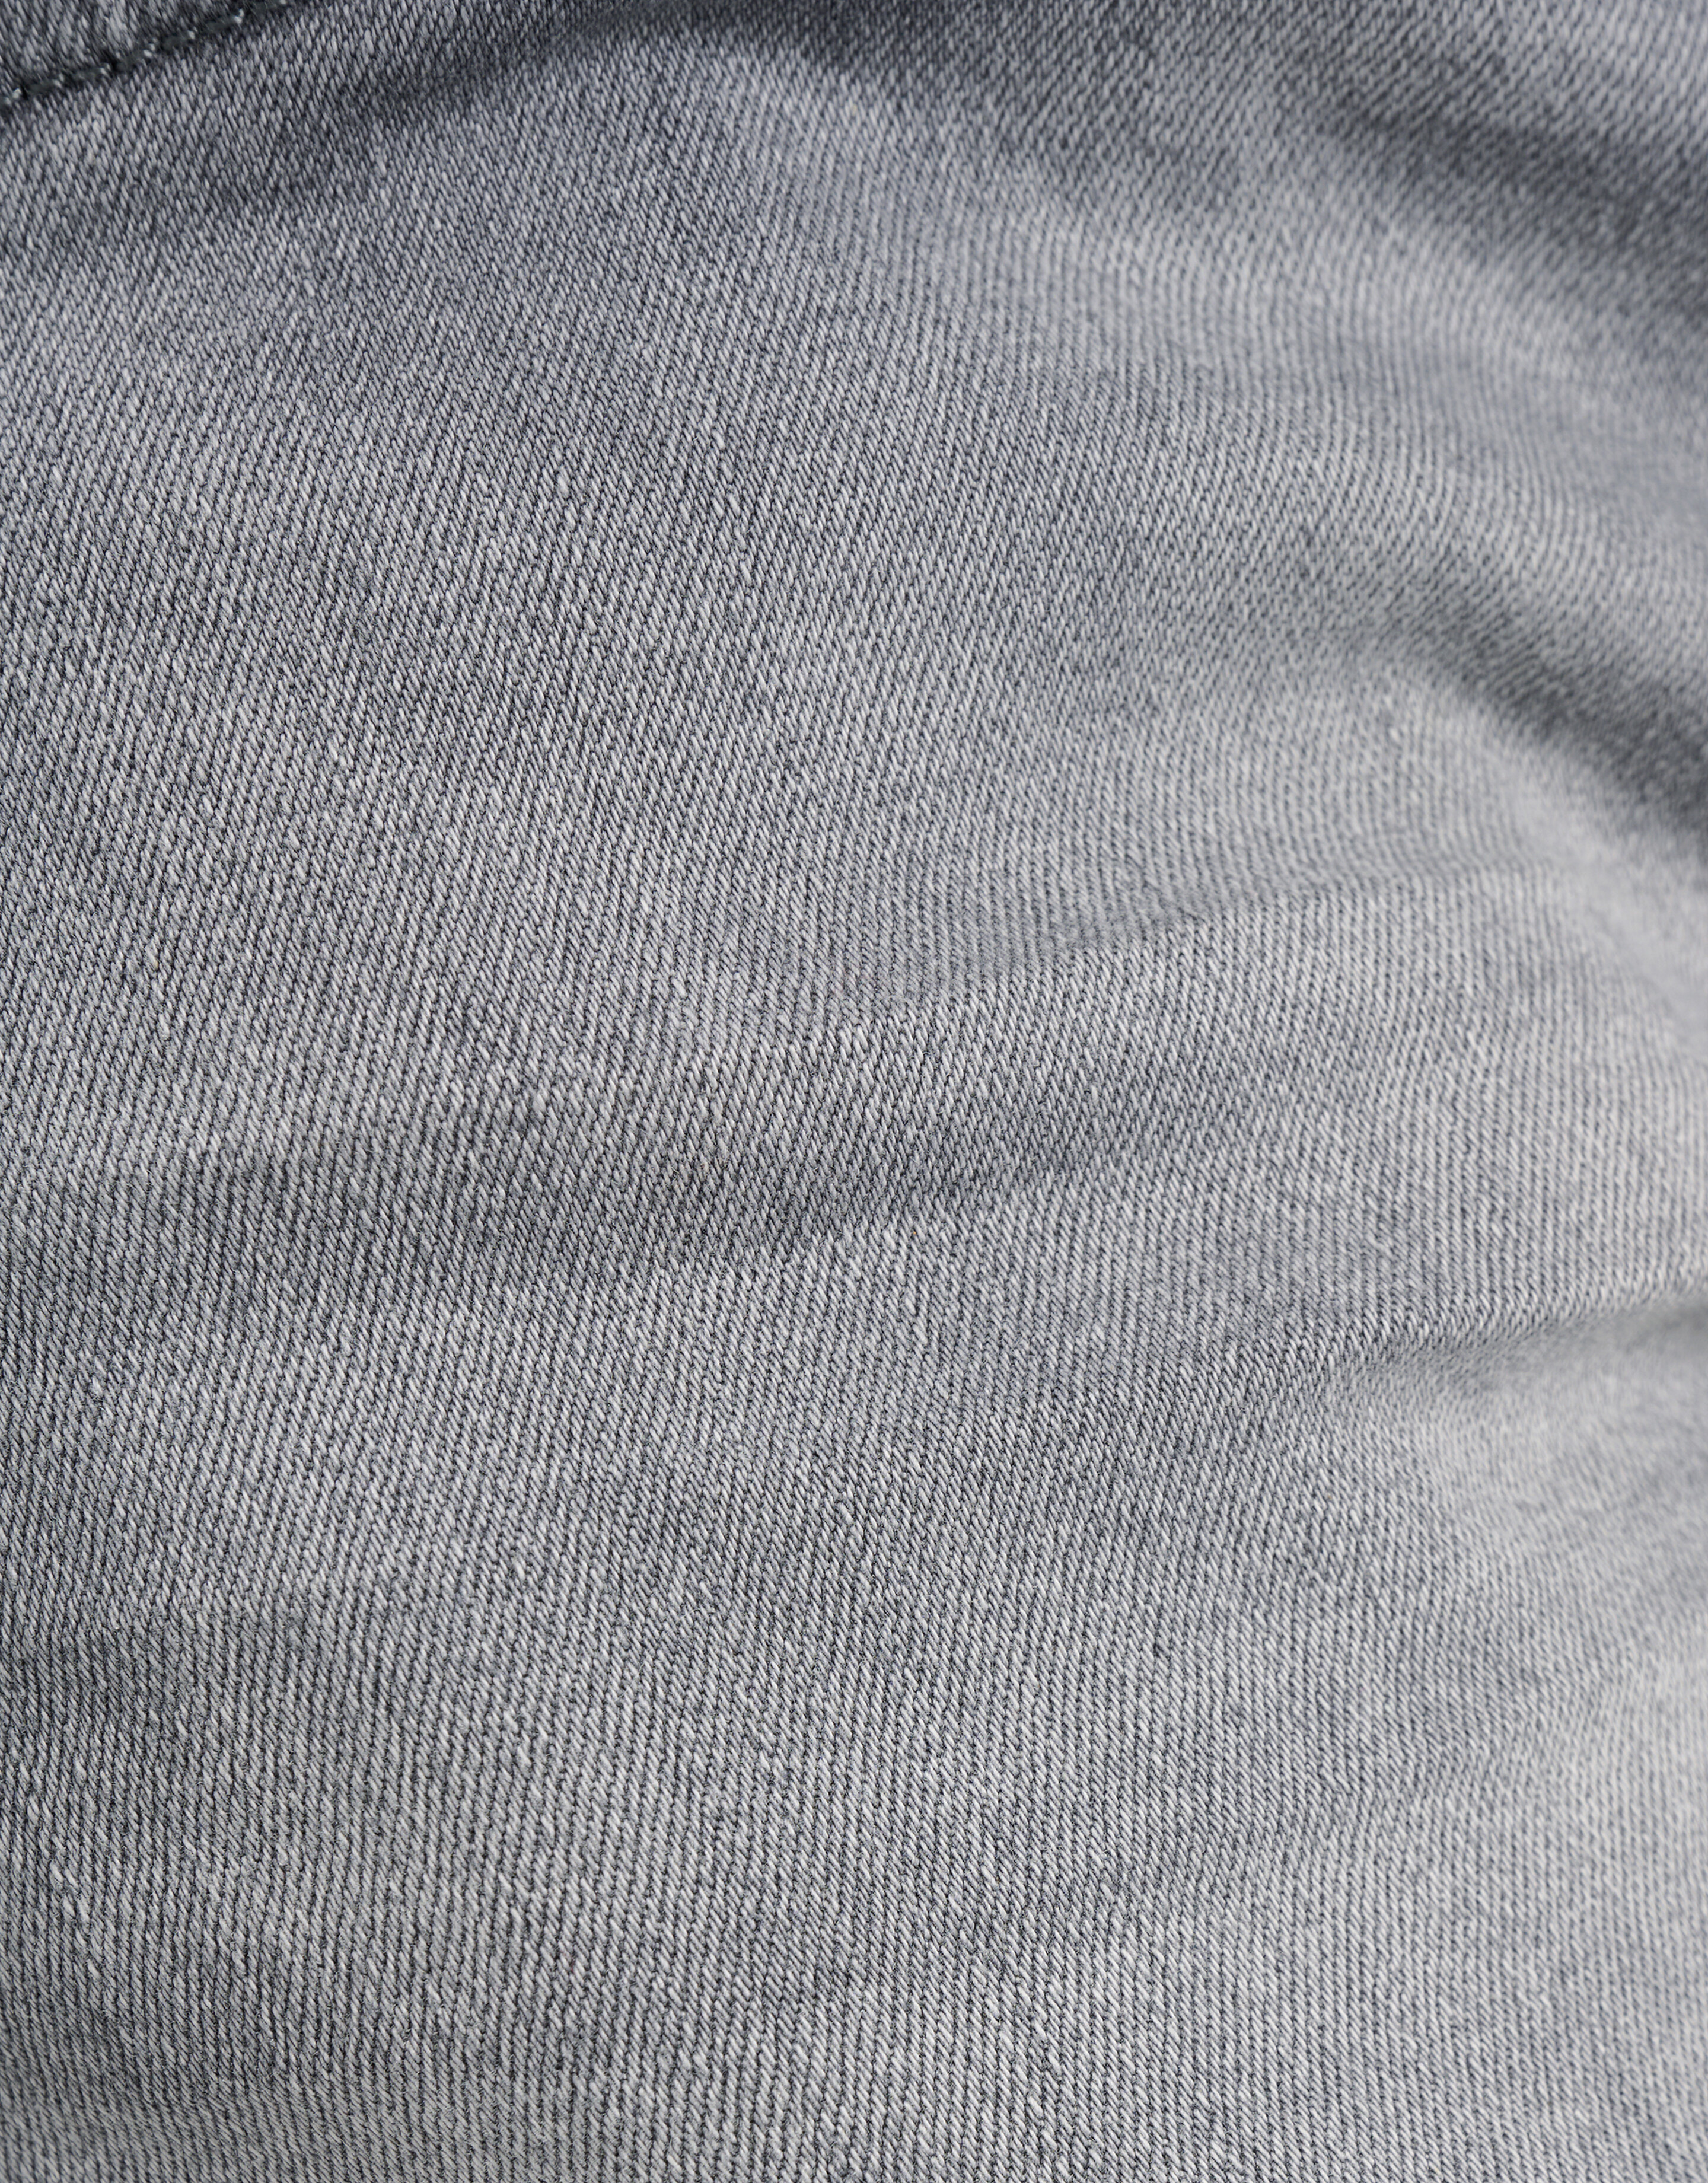 Skinny Jeans Jack Grey L32 Refill